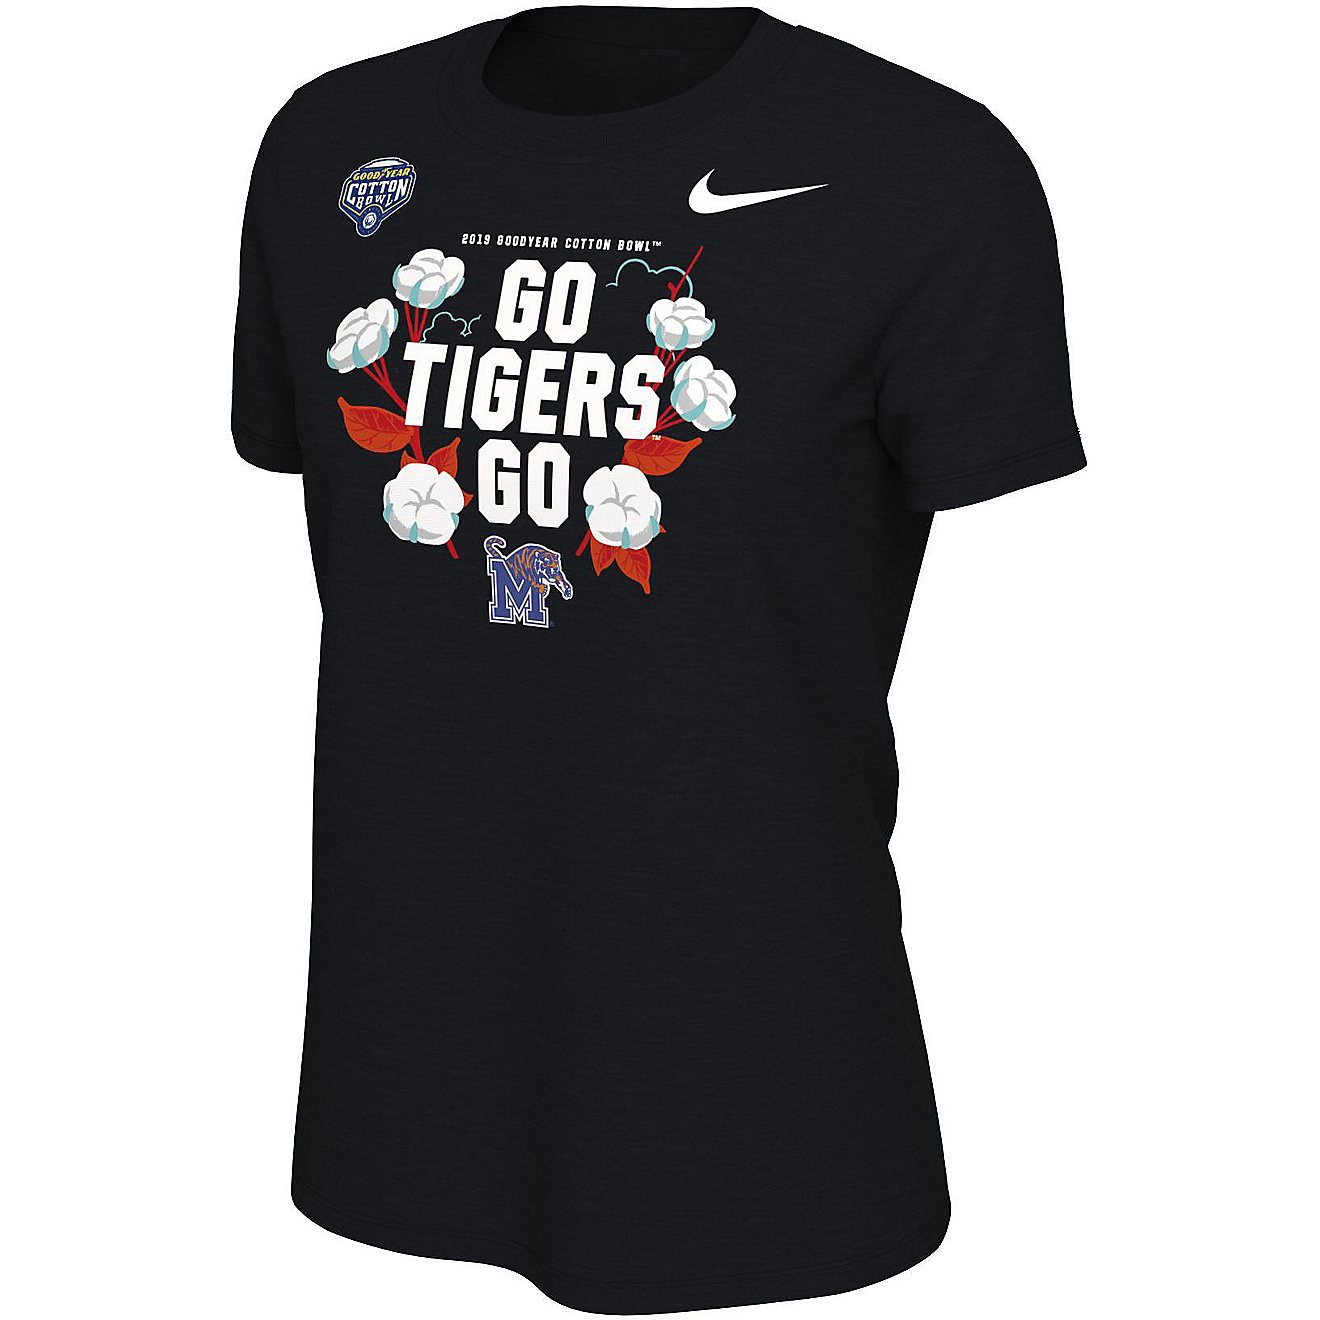 Nike Women's University of Memphis 2019 Cotton Bowl "Mantra" T-shirt                                                             - view number 1